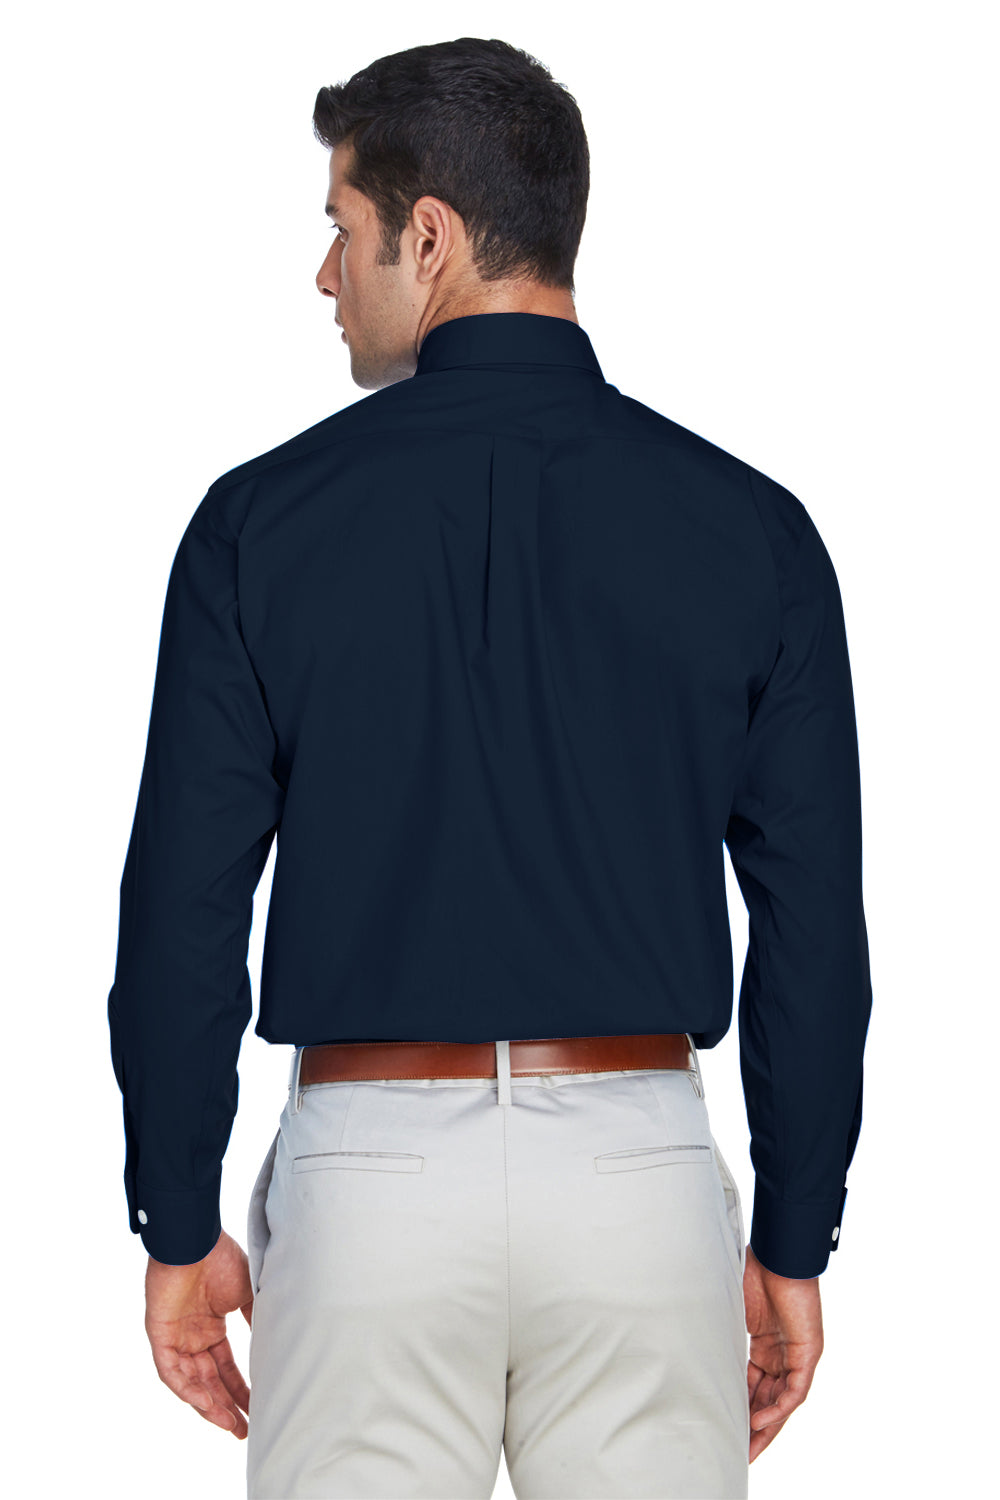 Devon & Jones D620 Mens Crown Woven Collection Wrinkle Resistant Long Sleeve Button Down Shirt w/ Pocket Navy Blue Back